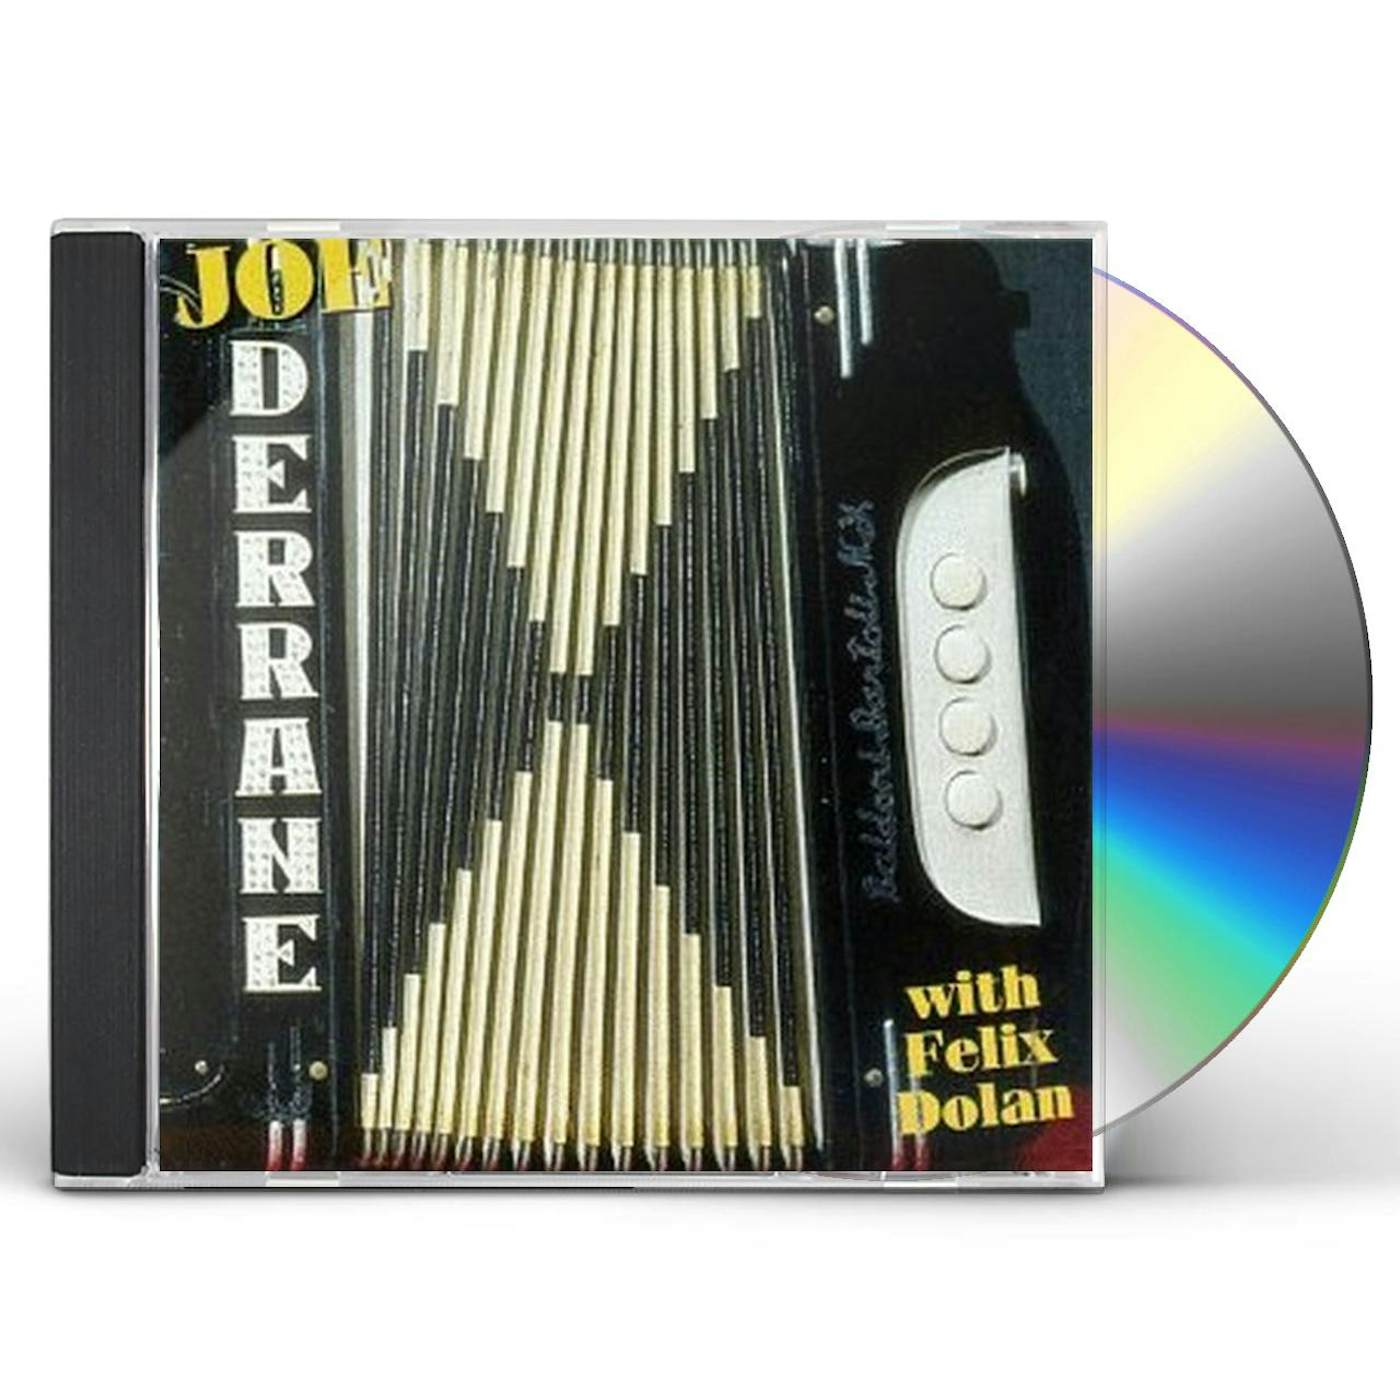 Joe Derrane GIVE US ANOTHER CD